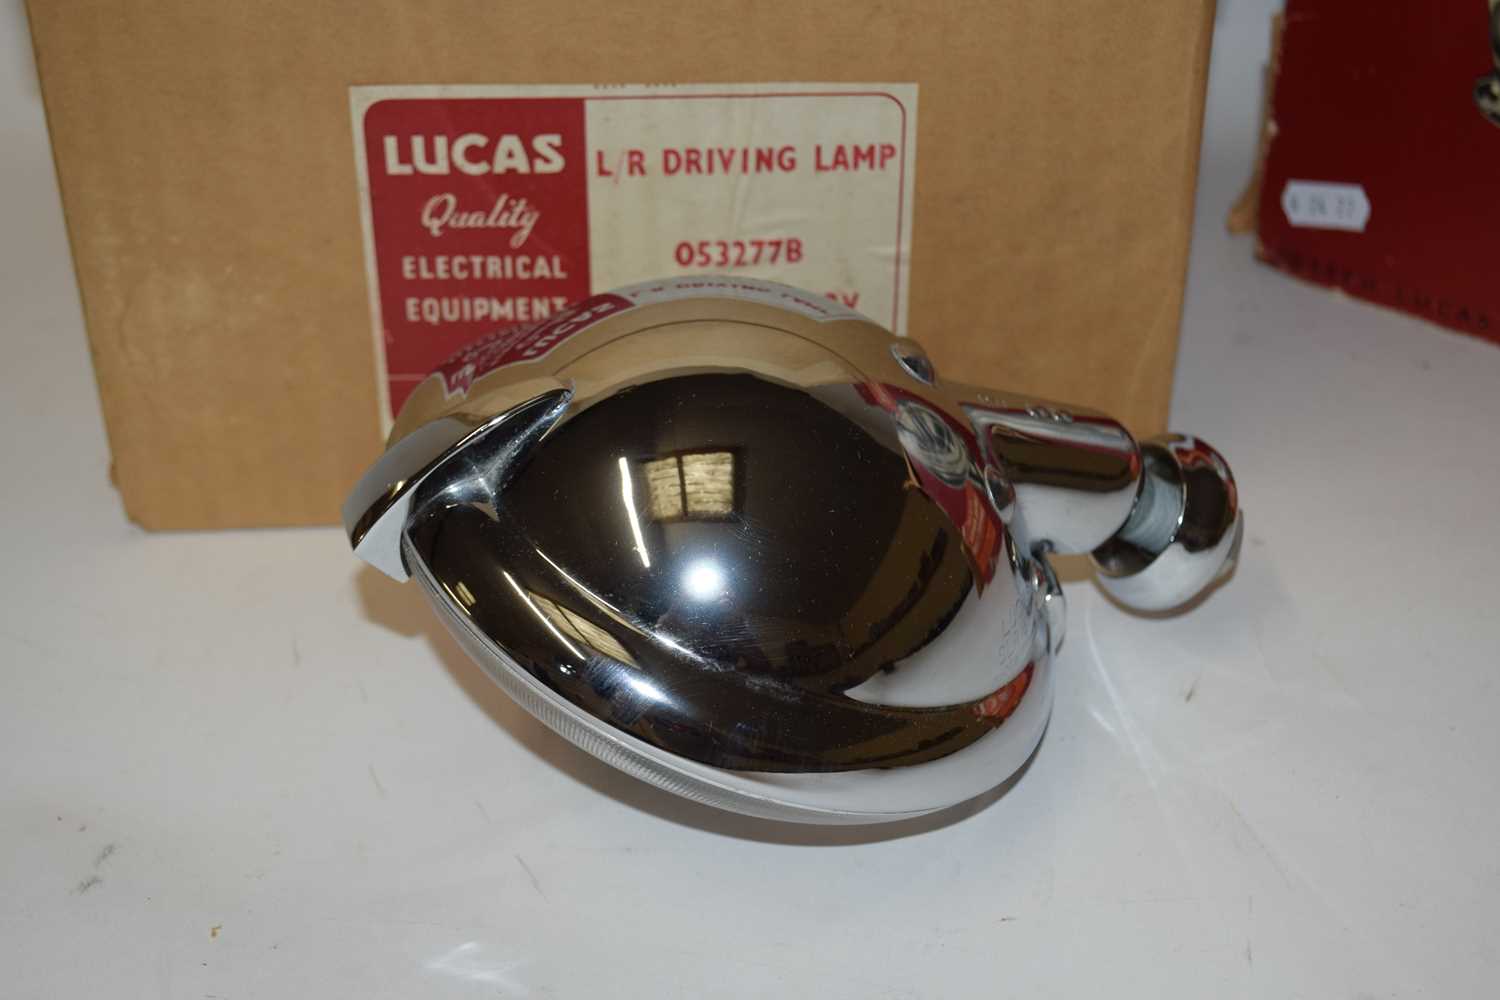 Lucas Long Range driving lamp SLR576 with original packaging - Image 2 of 4